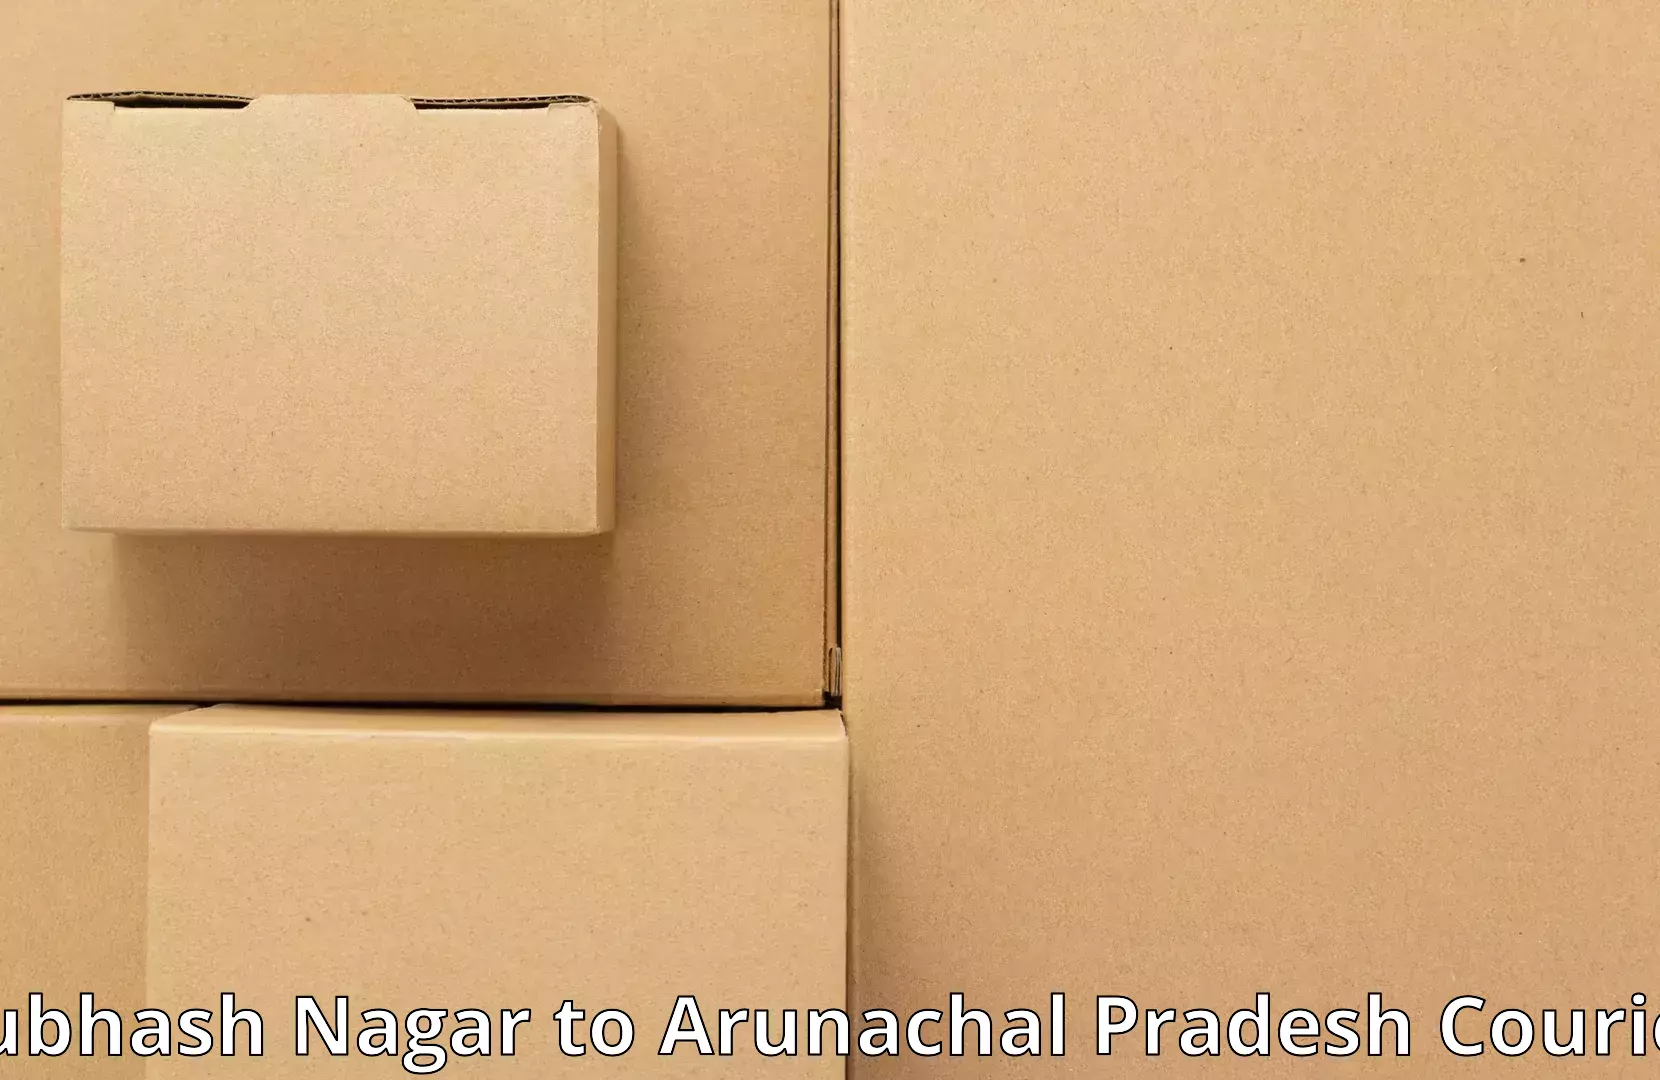 Seamless moving process in Subhash Nagar to Arunachal Pradesh